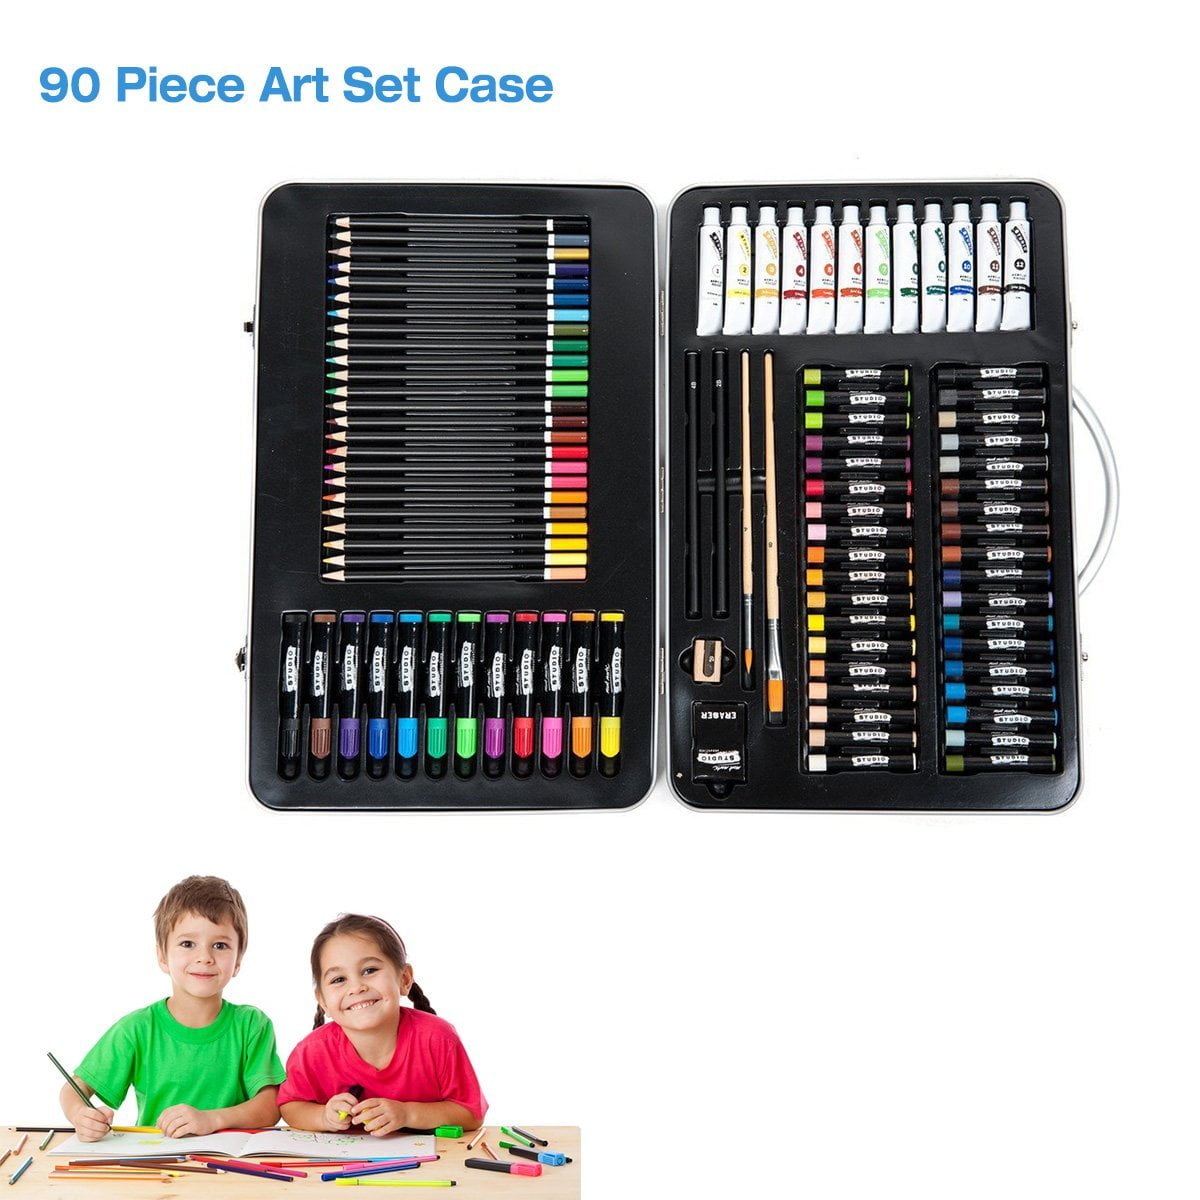 12 Pc Pencil Sharpener Assorted Shapes Colors School Supplies